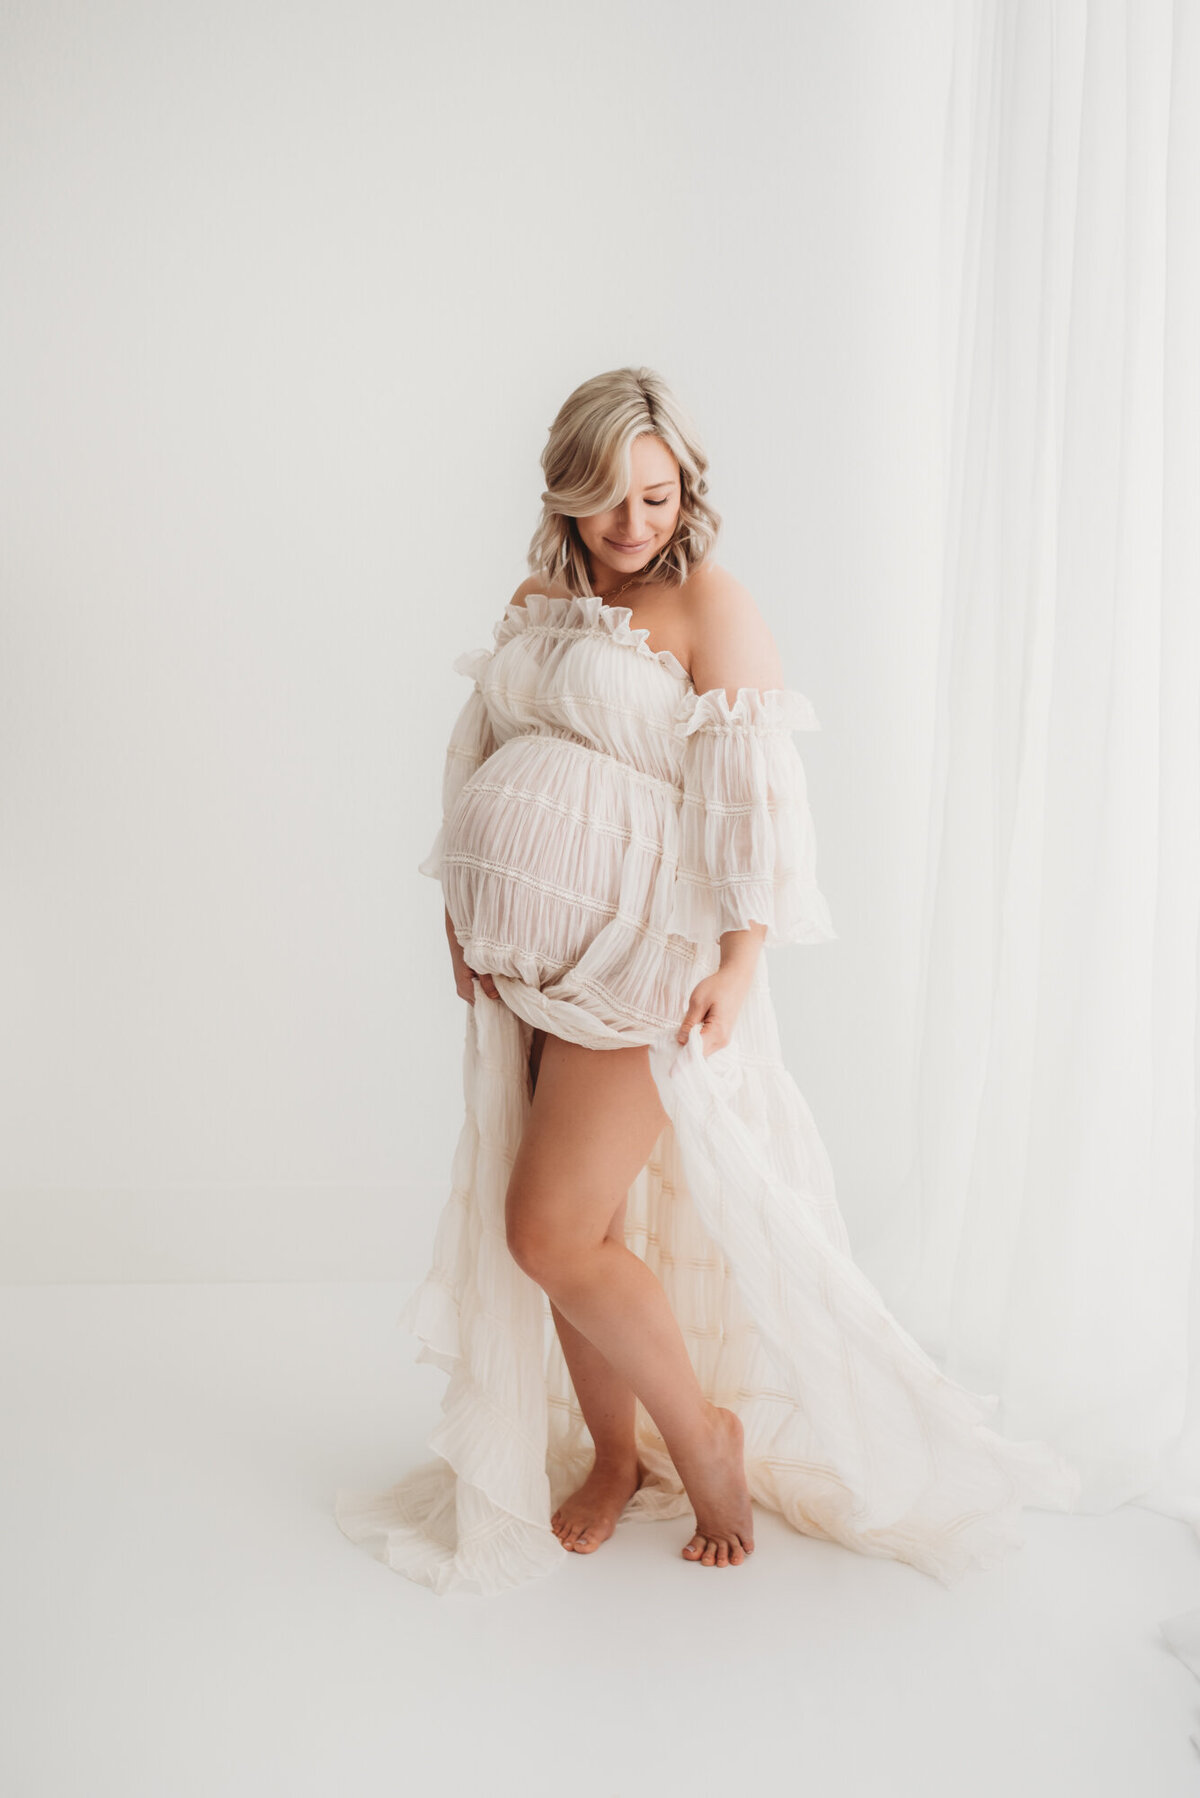 pregnant woman holding boho cream dress showing her legs